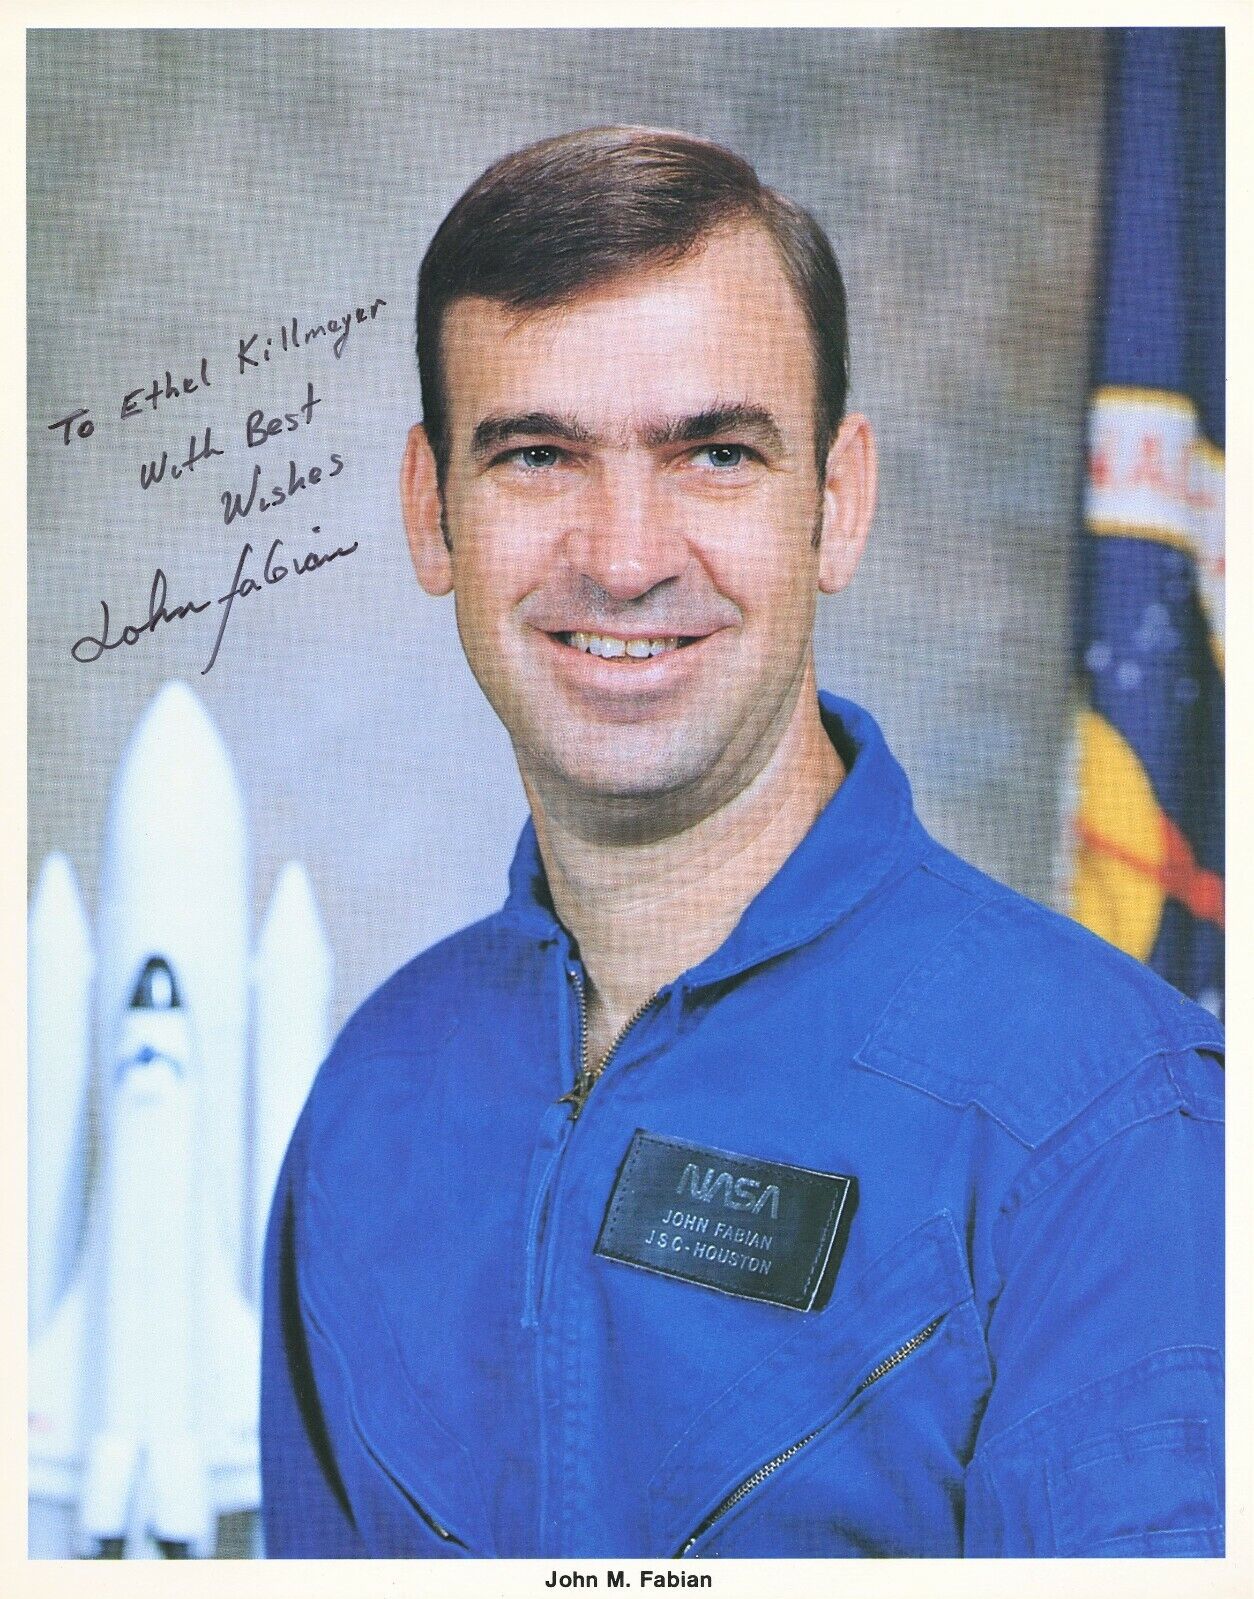 Shuttle Astronaut JOHN M. FABIAN Signed Photo Poster painting